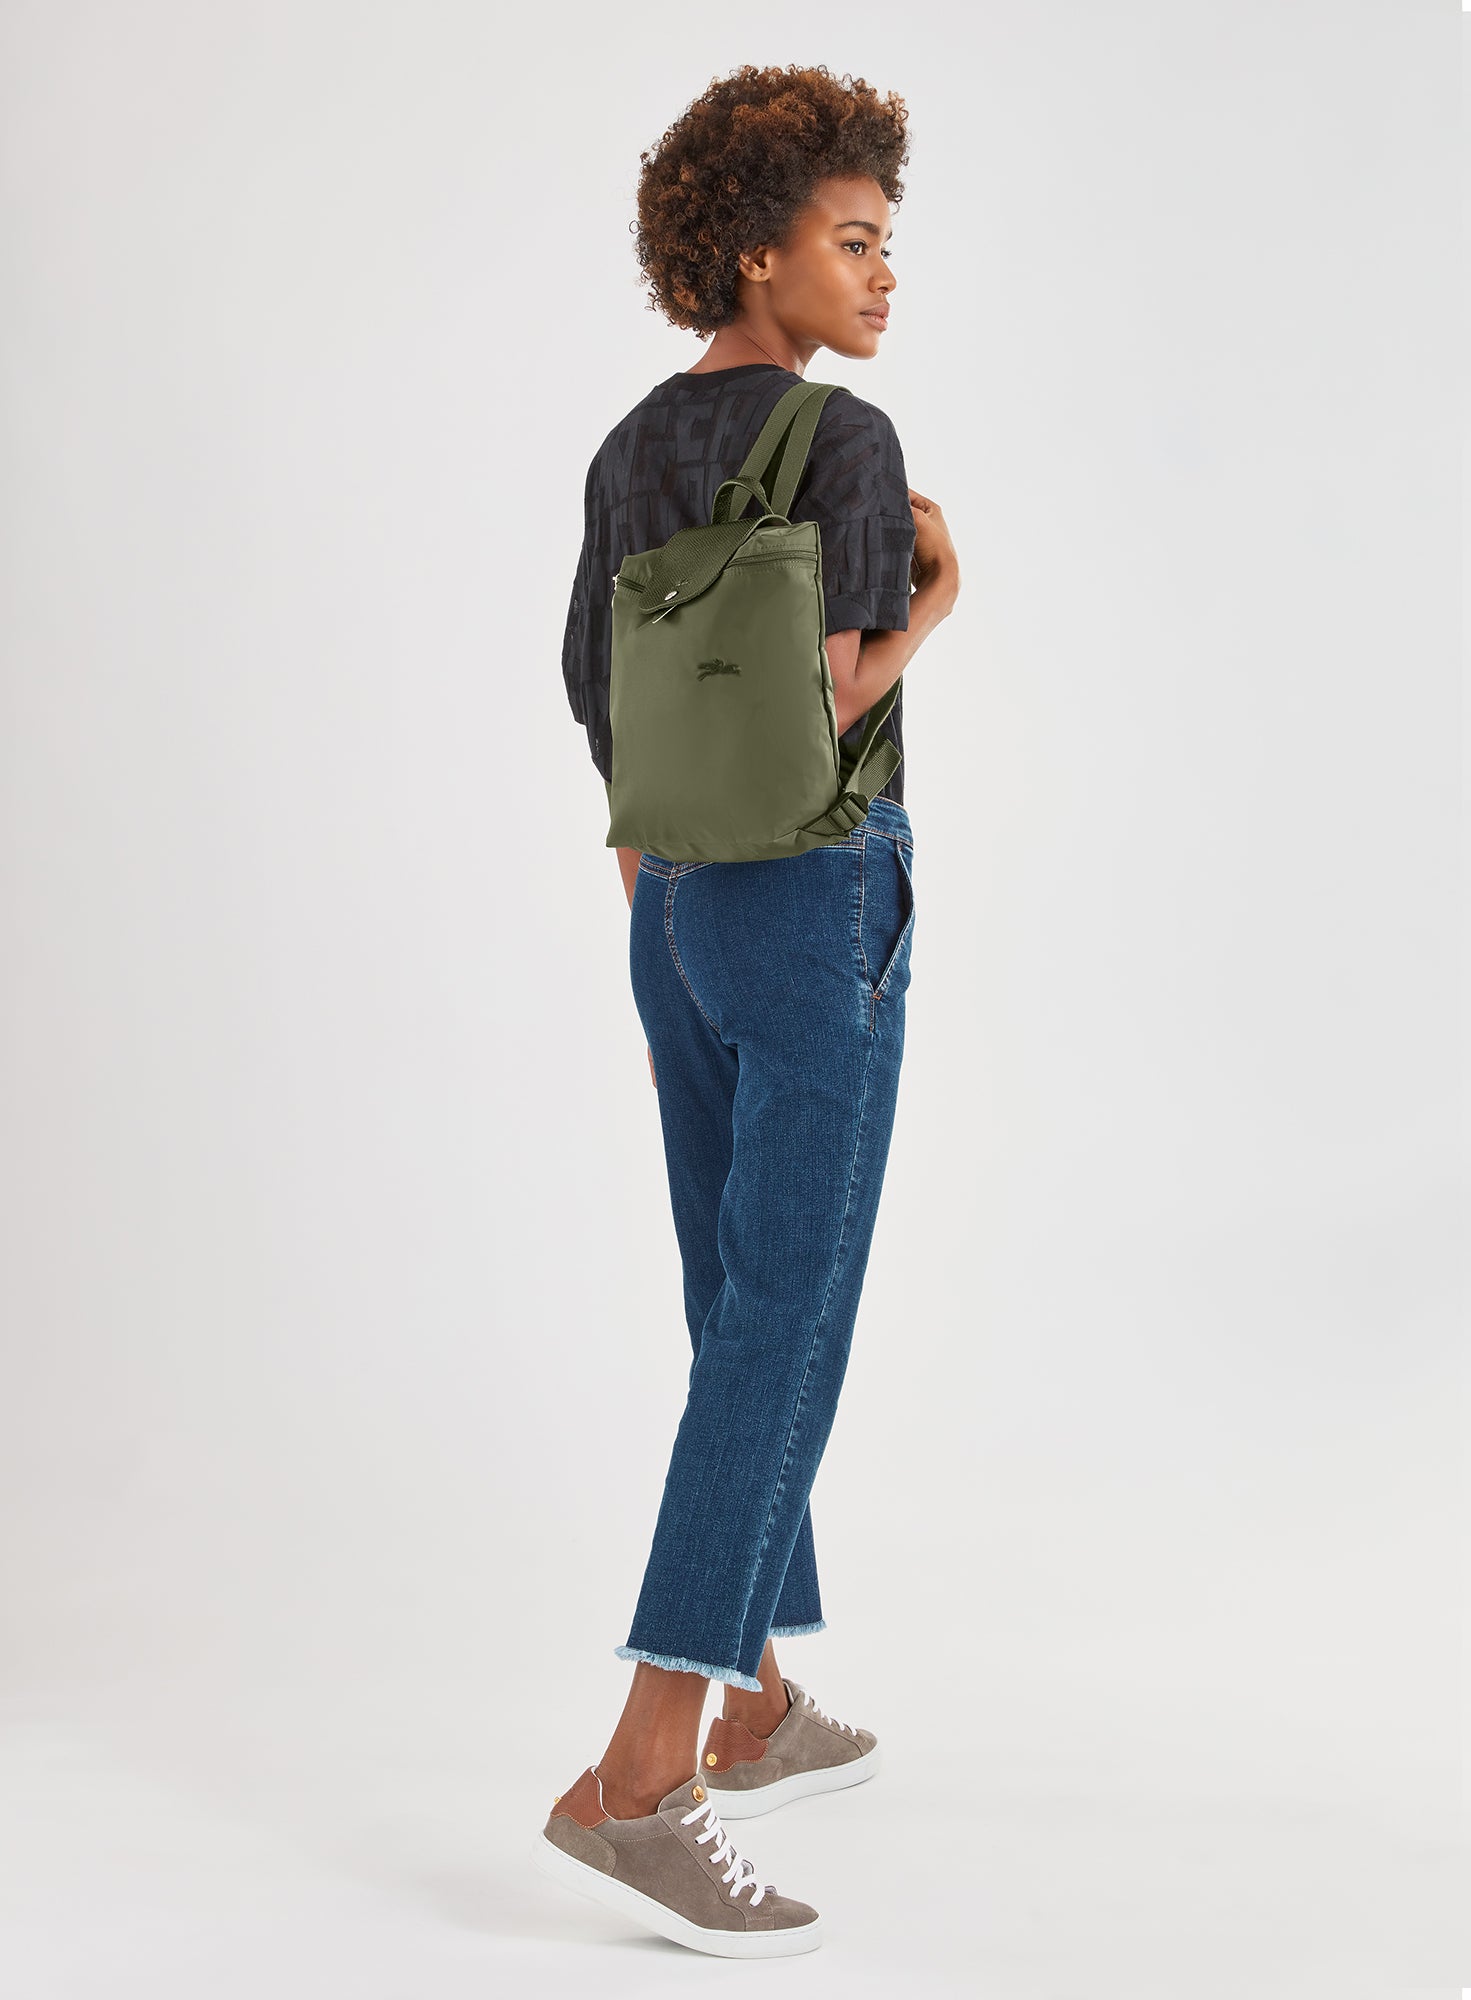 Buy Longchamp 'Medium 'Le Pliage' Tote Shoulder Bag, Gunmetal at Amazon.in